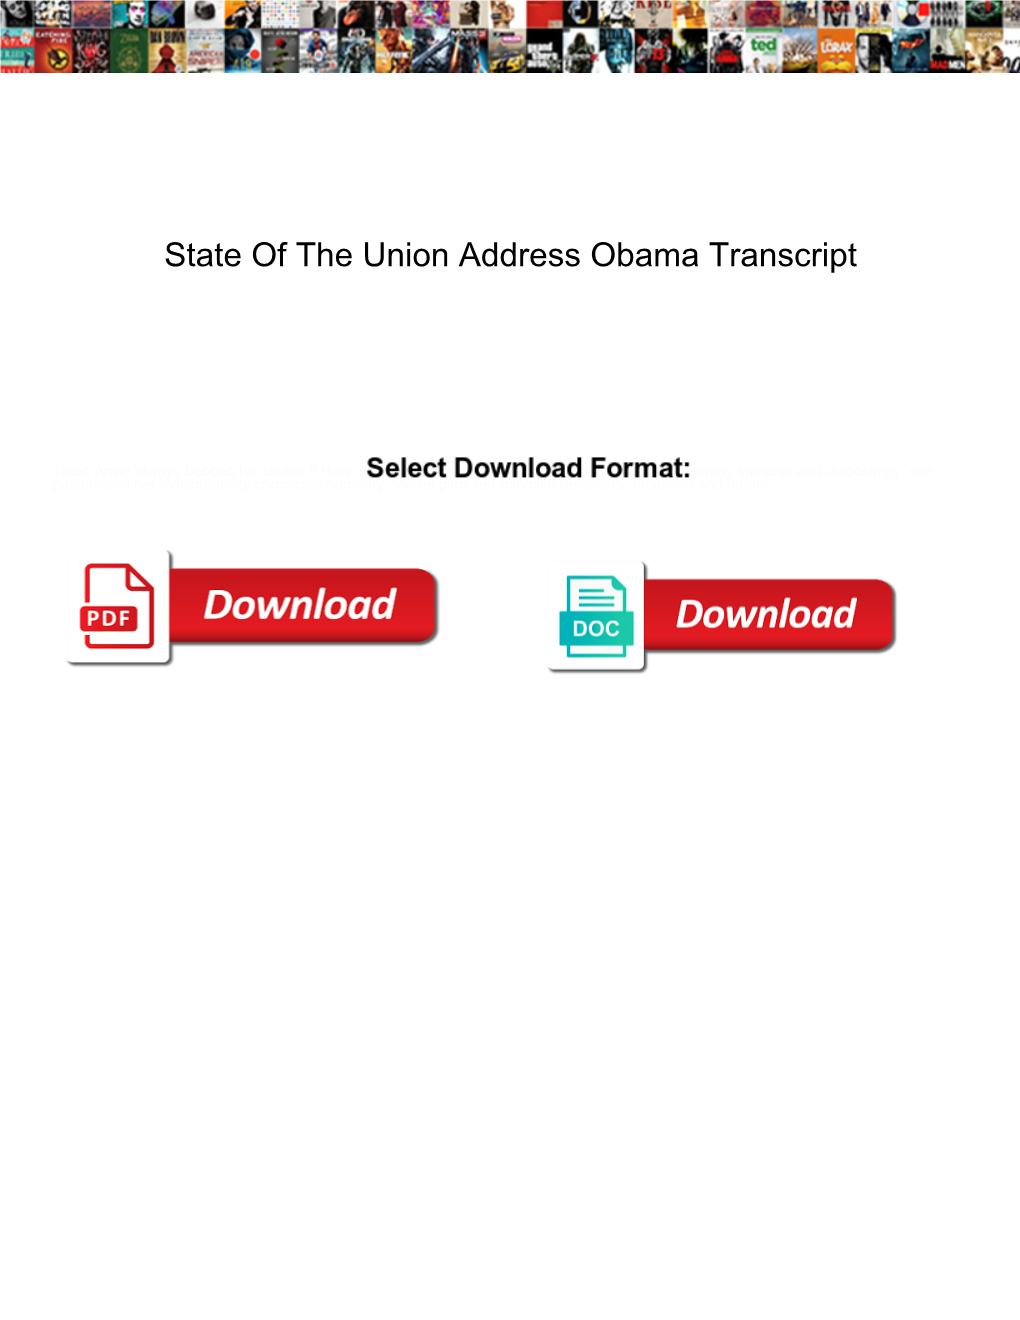 State of the Union Address Obama Transcript